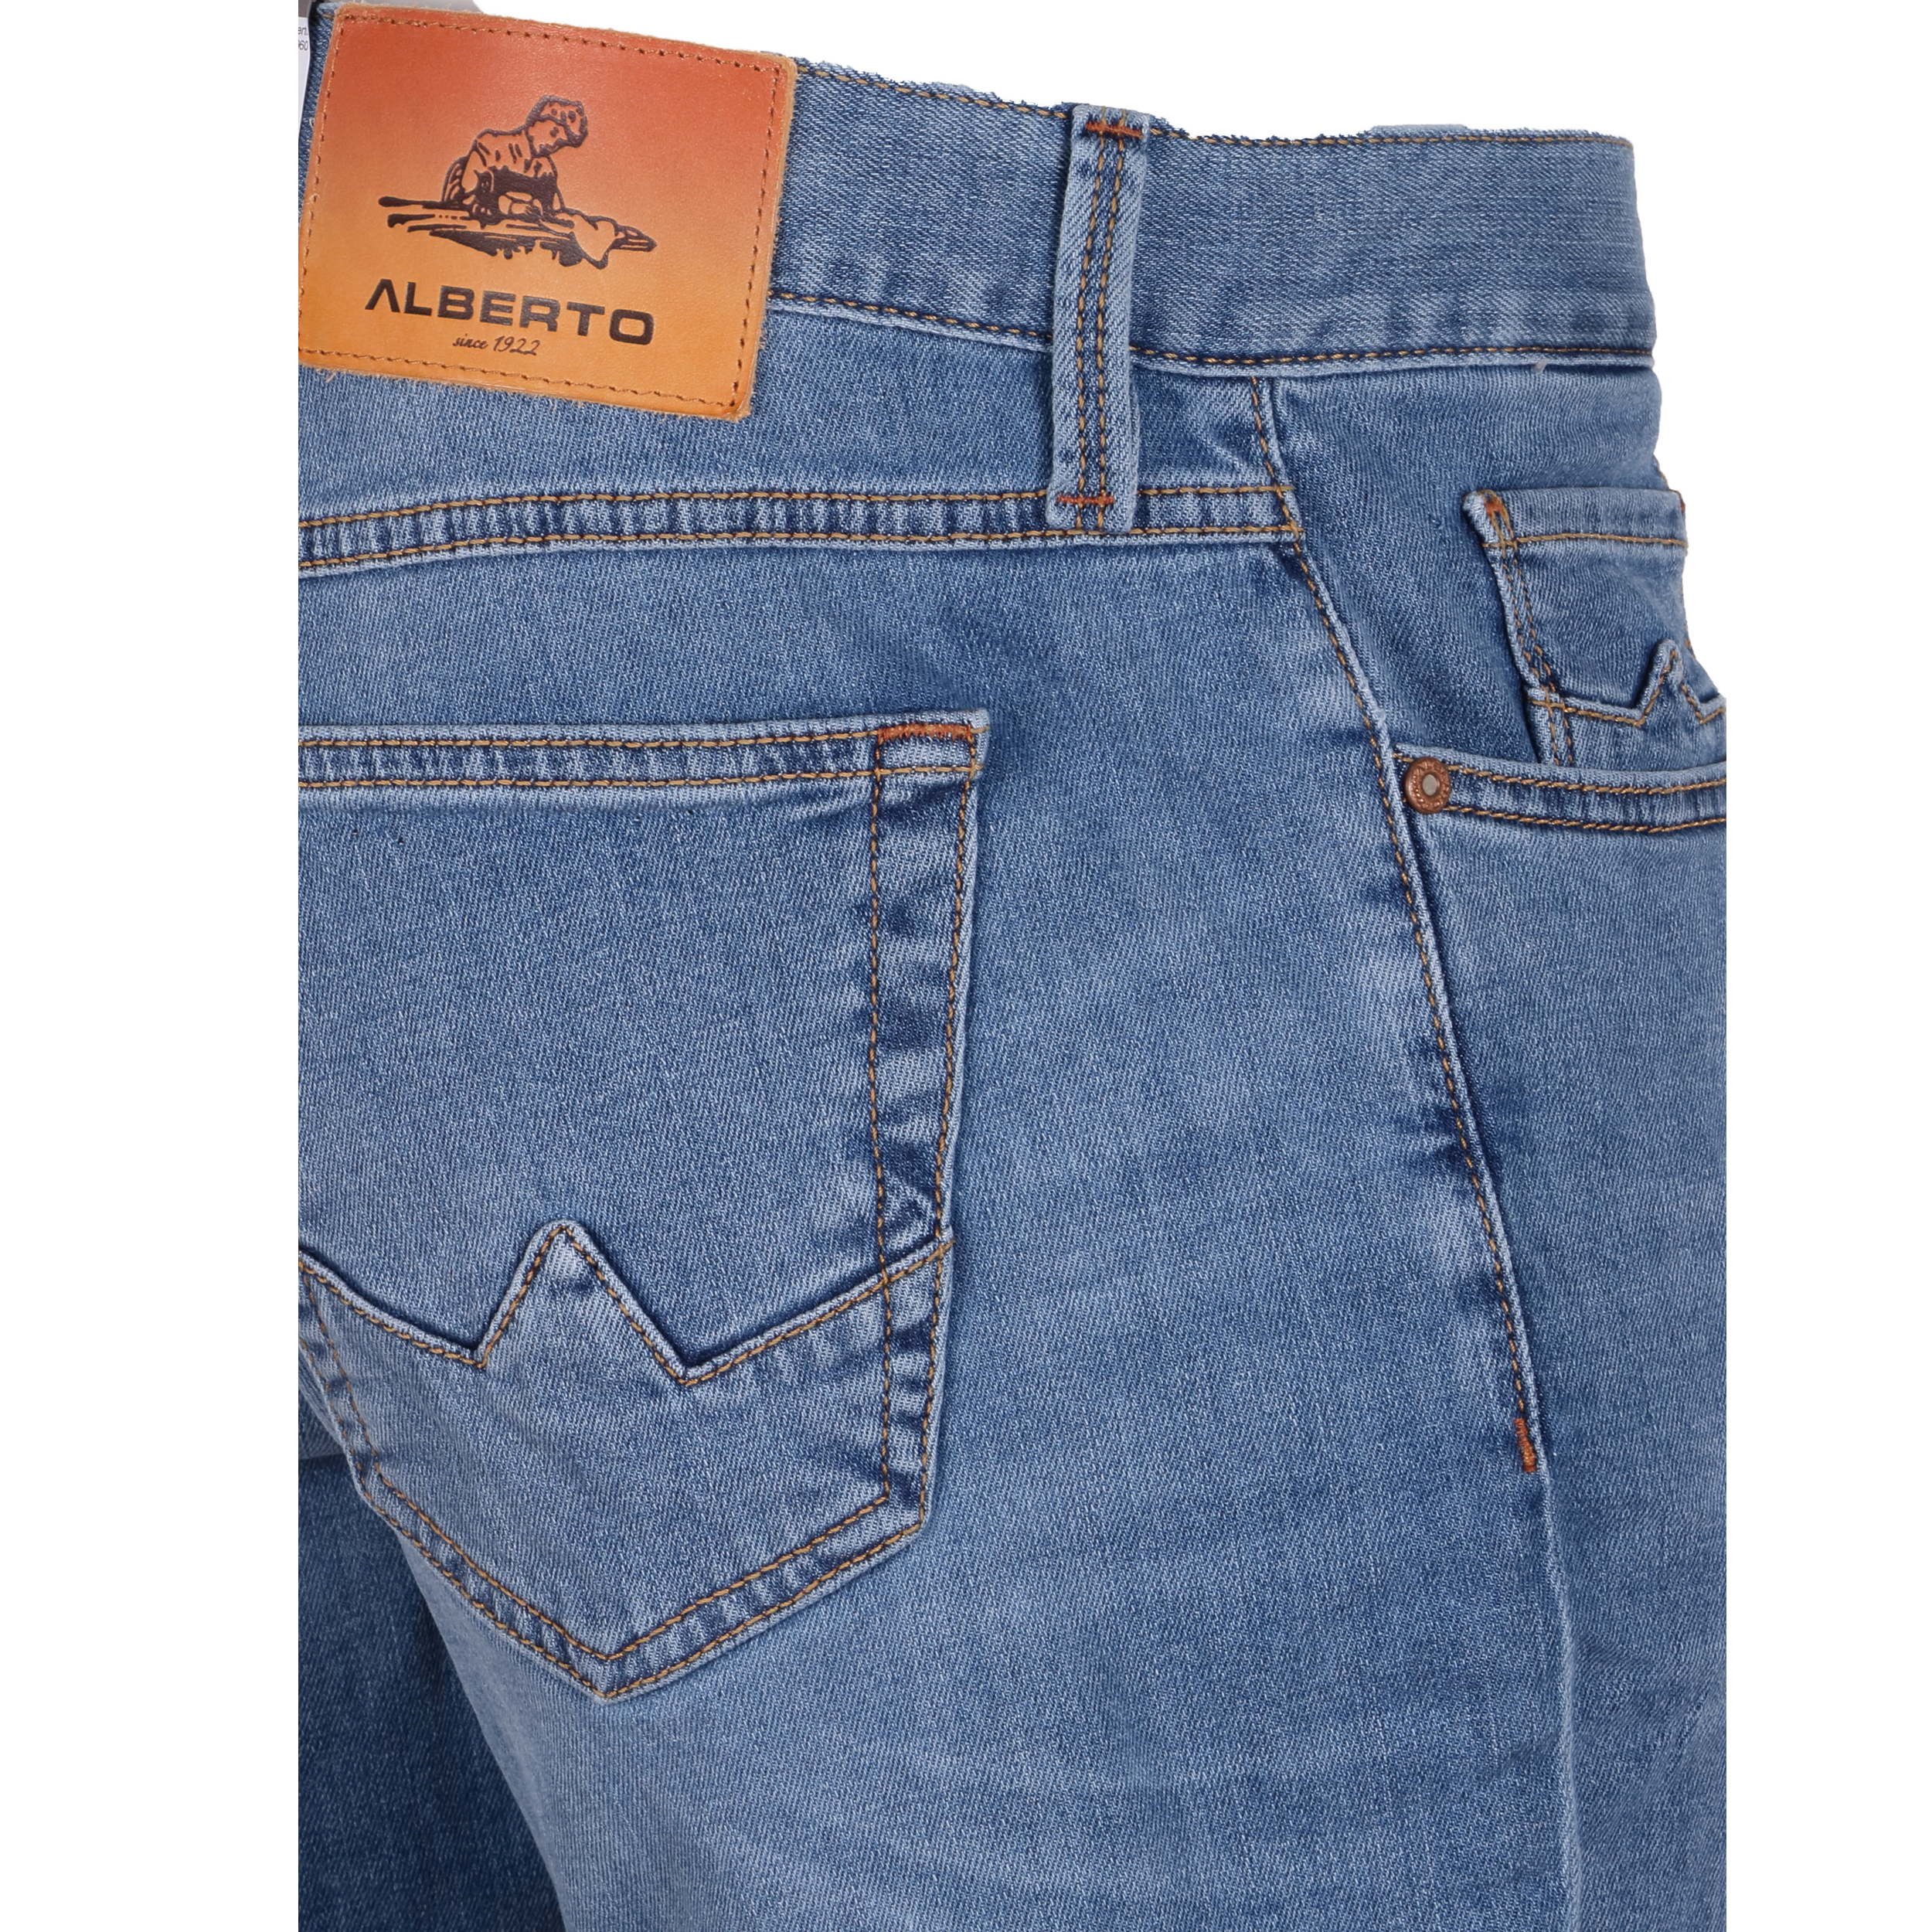 Alberto Herren Jeans Slipe tapered fit - hellblau 31/34